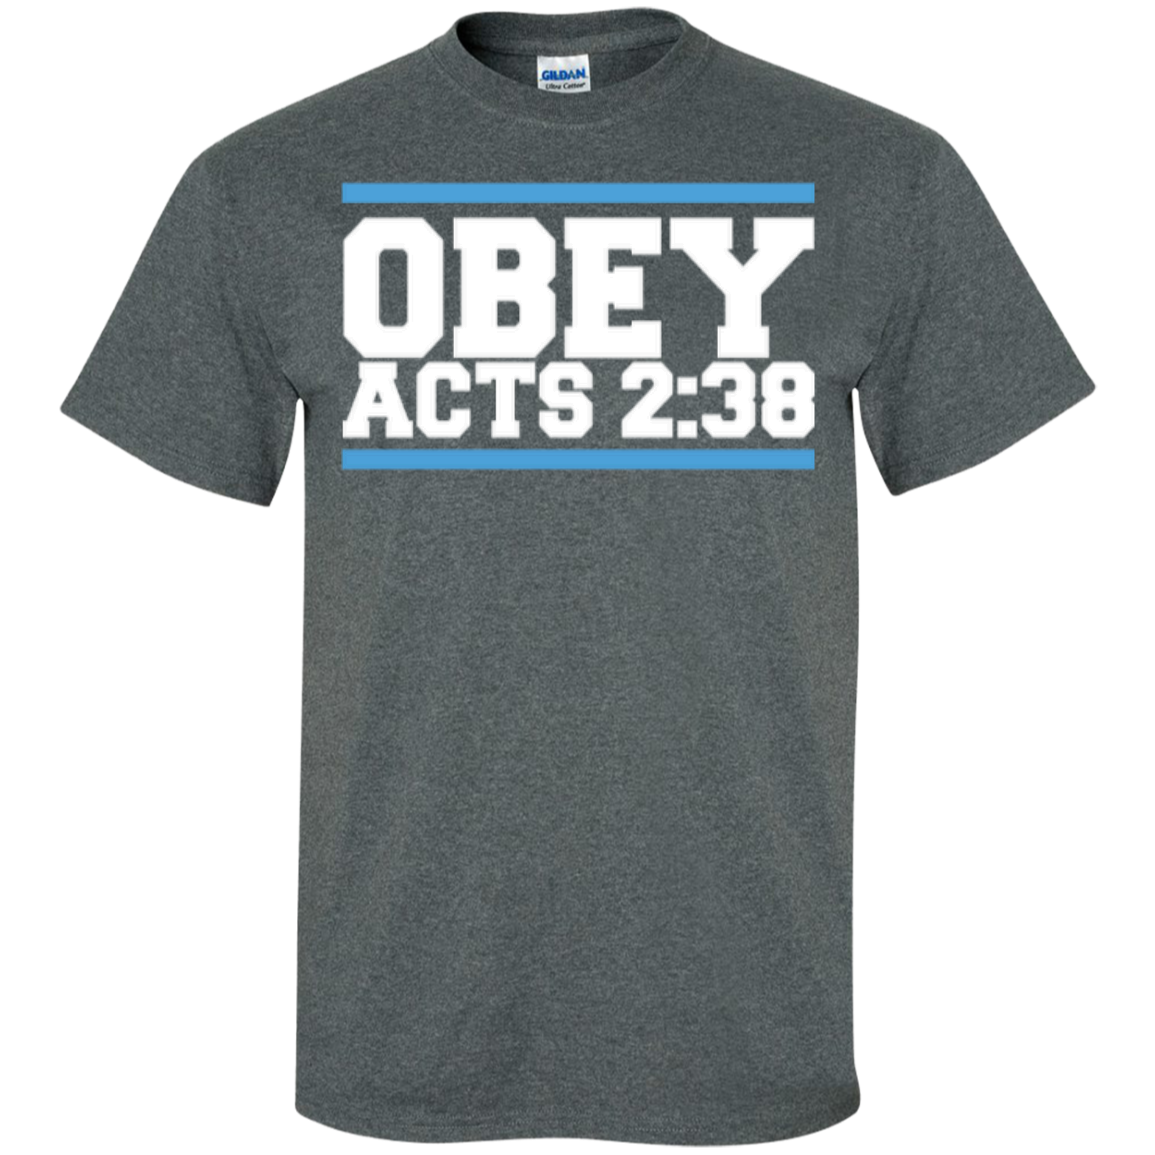 Obey Acts 2:38 - Cotton T-Shirt - Apostolic Wear - Kick Merch - 2